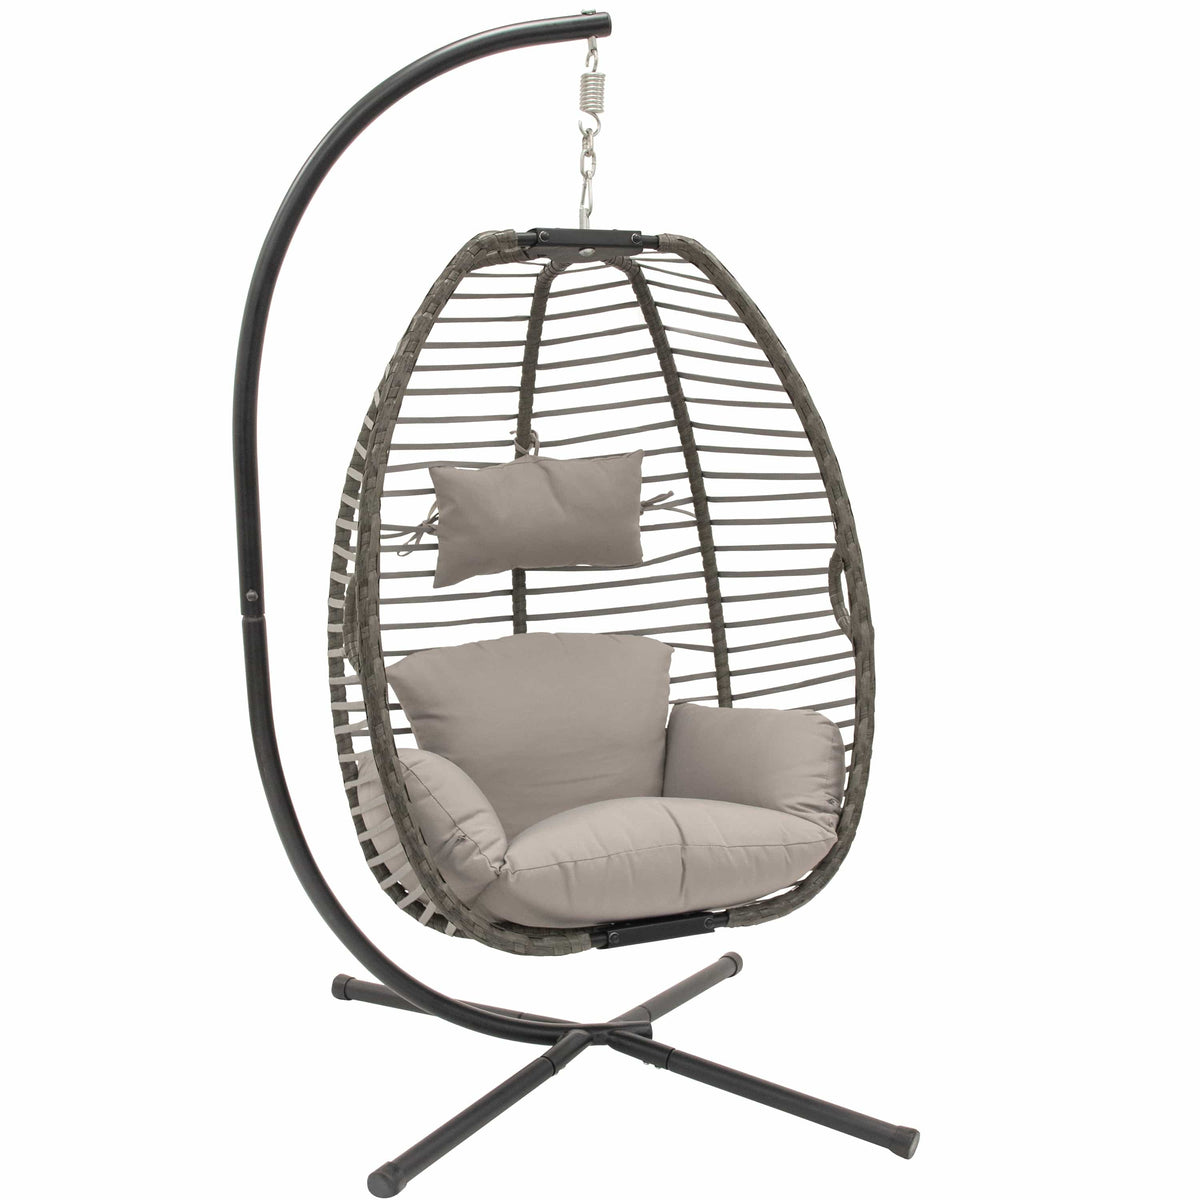 Nest Hanging Egg Chair Combo